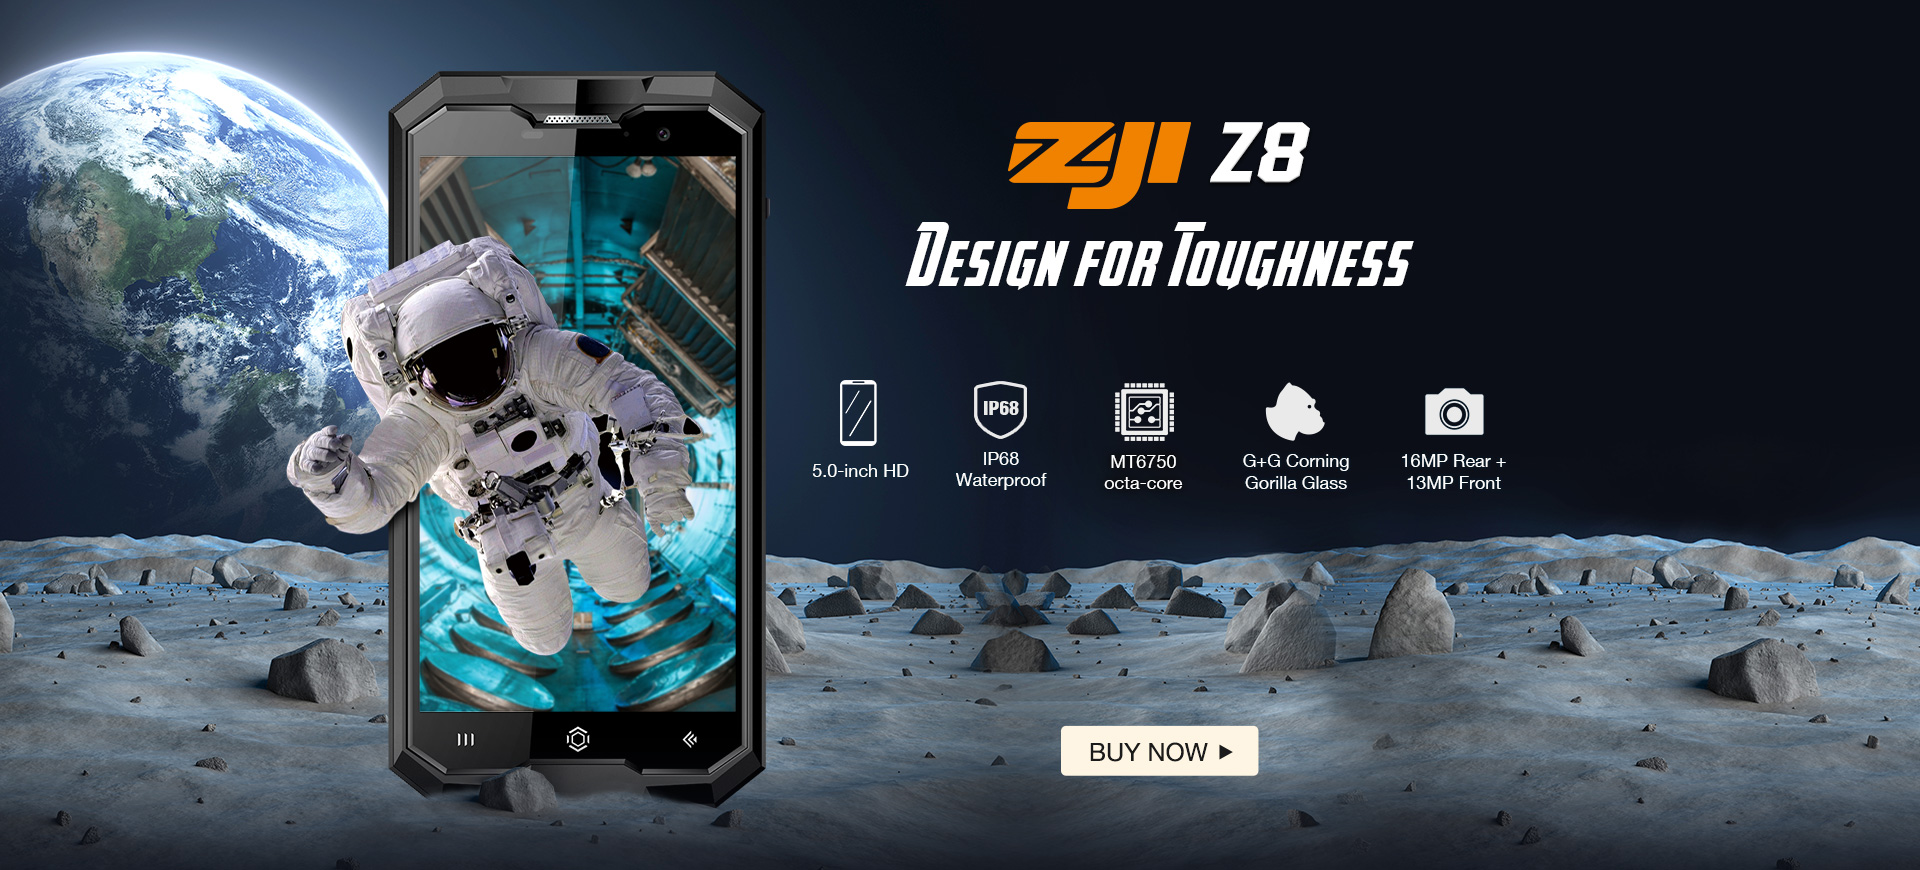 ZOJI Z8 — he's like Darth Vader, only smartphone